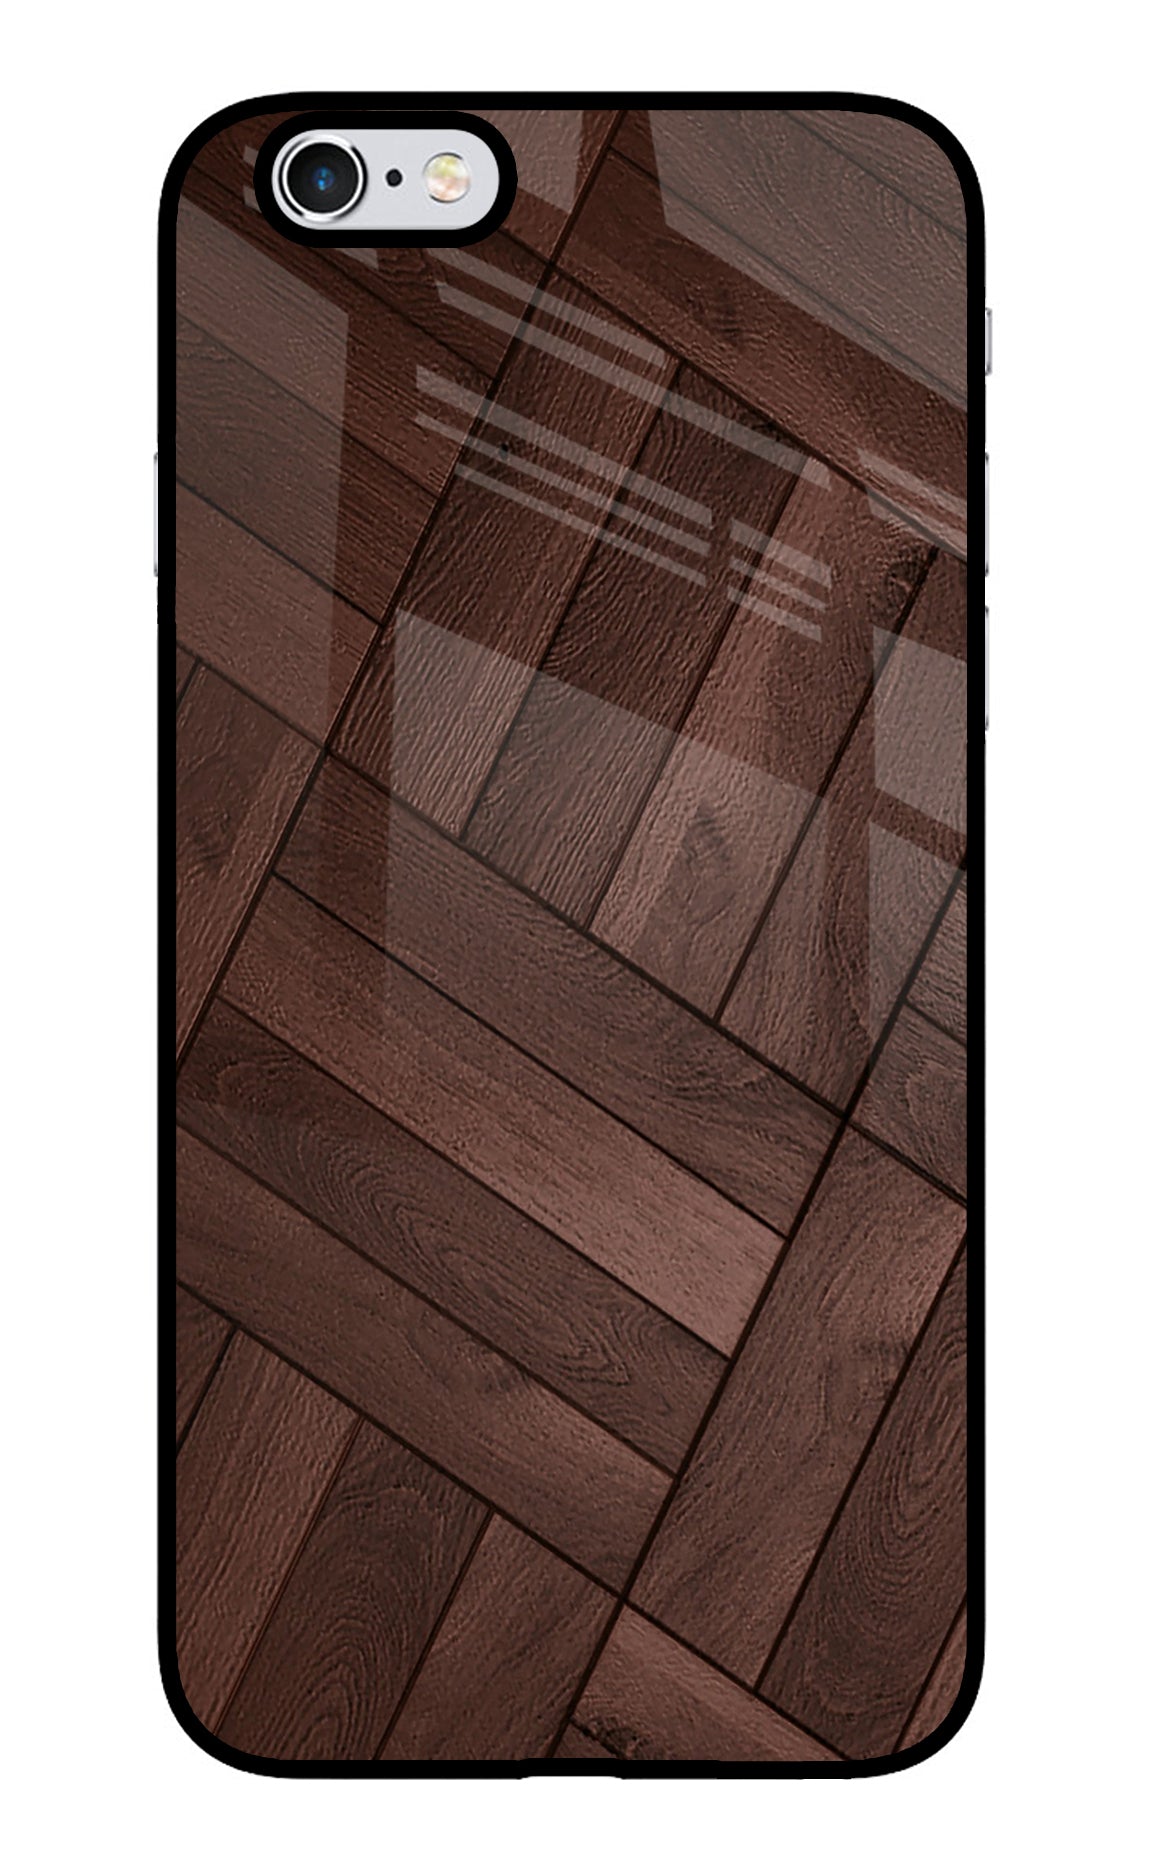 Wooden Texture Design iPhone 6 Plus/6s Plus Glass Case